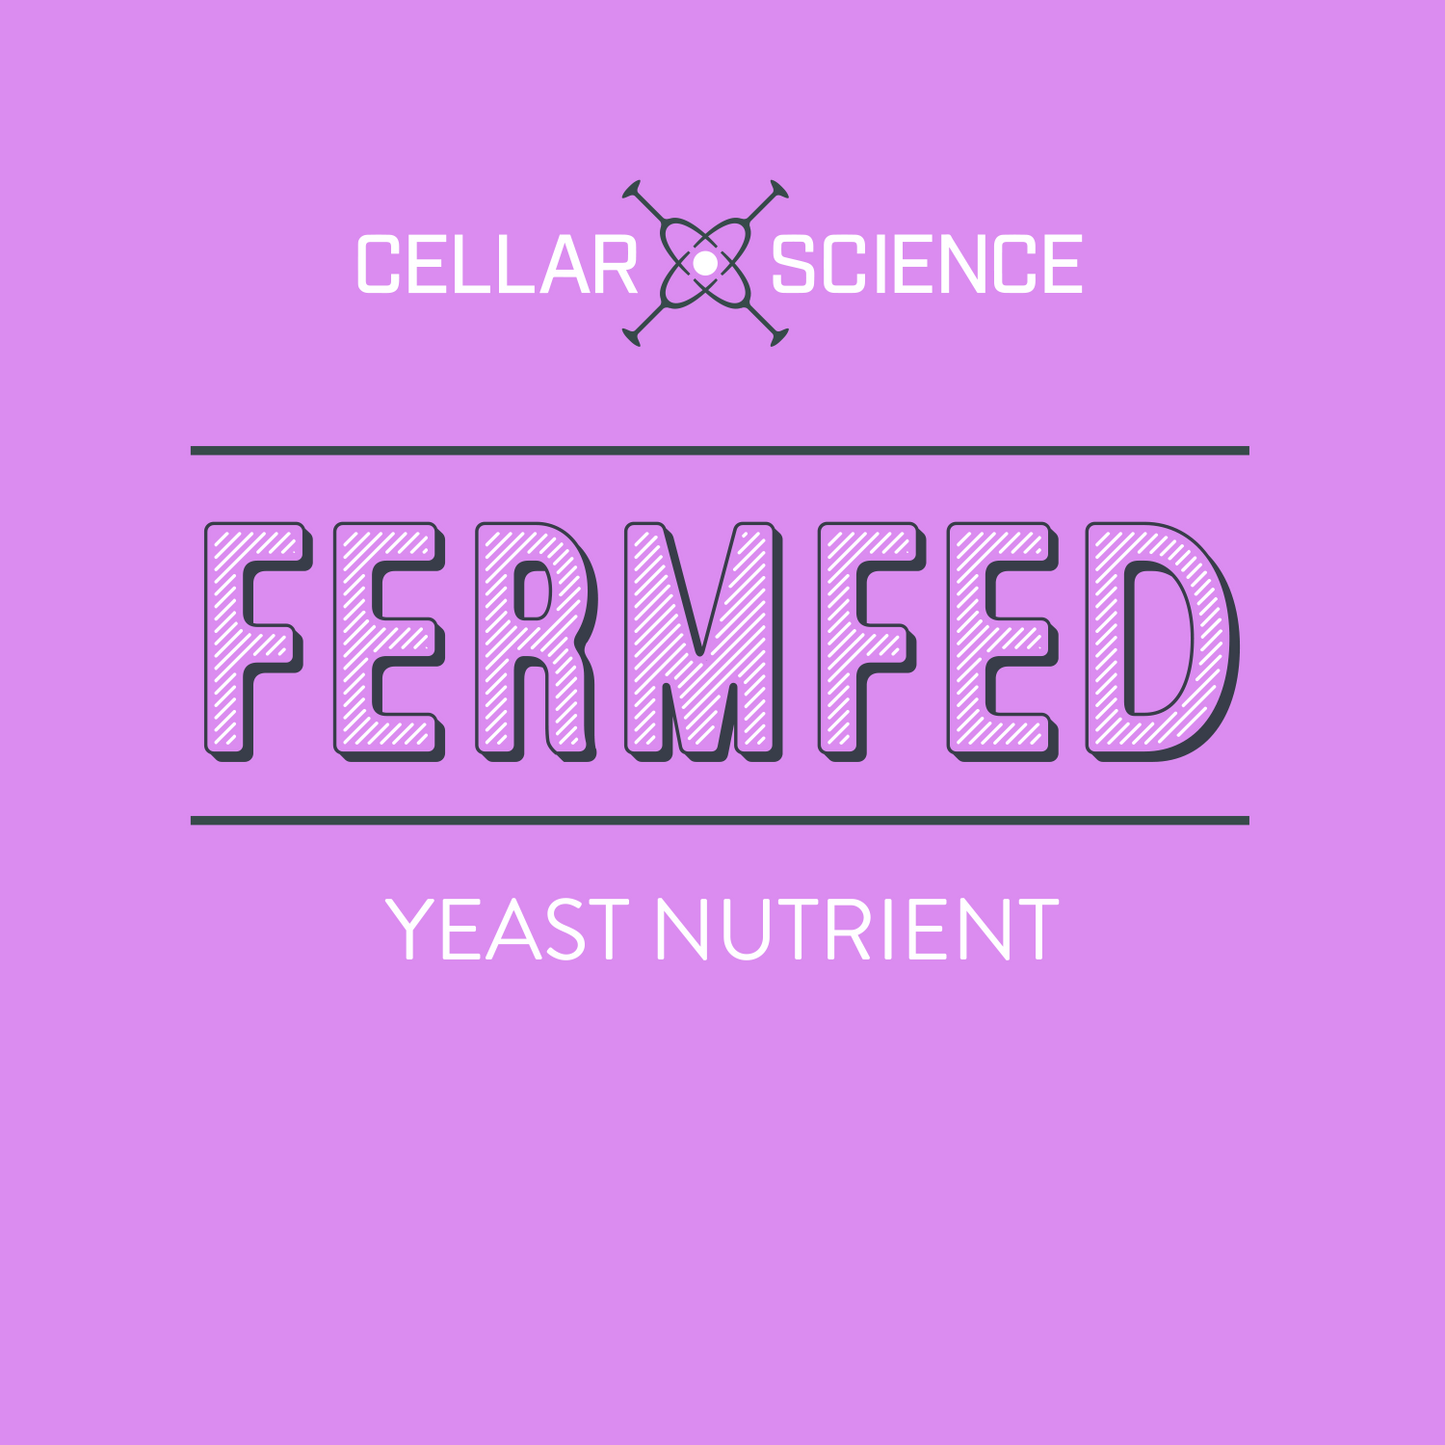 FERMFED Yeast Nutrient